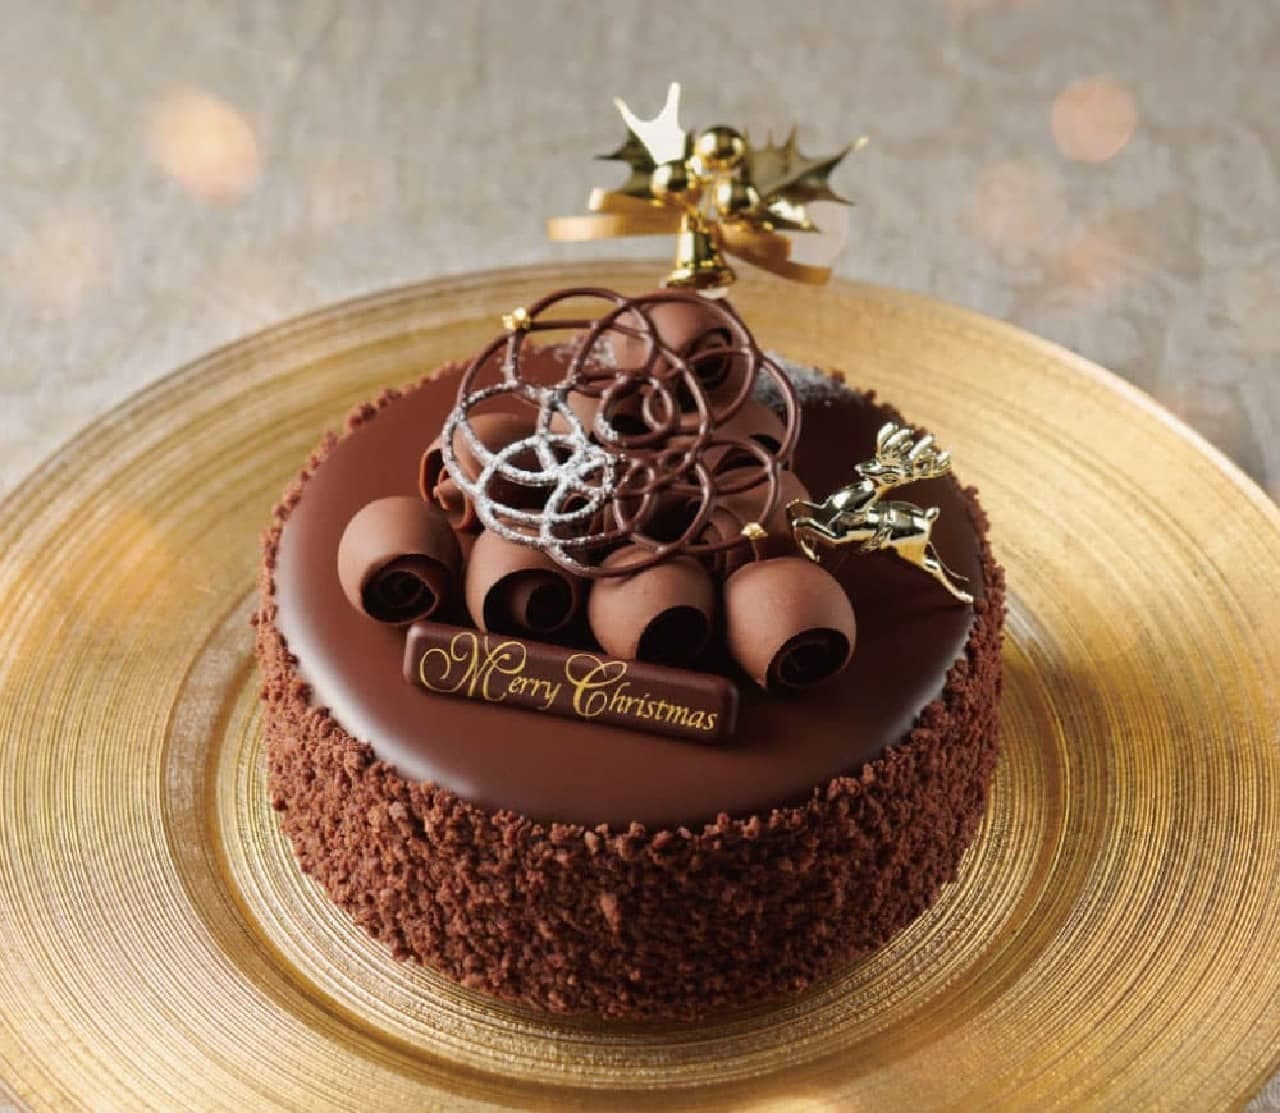 Antenor "Ganache Chocolat Noel